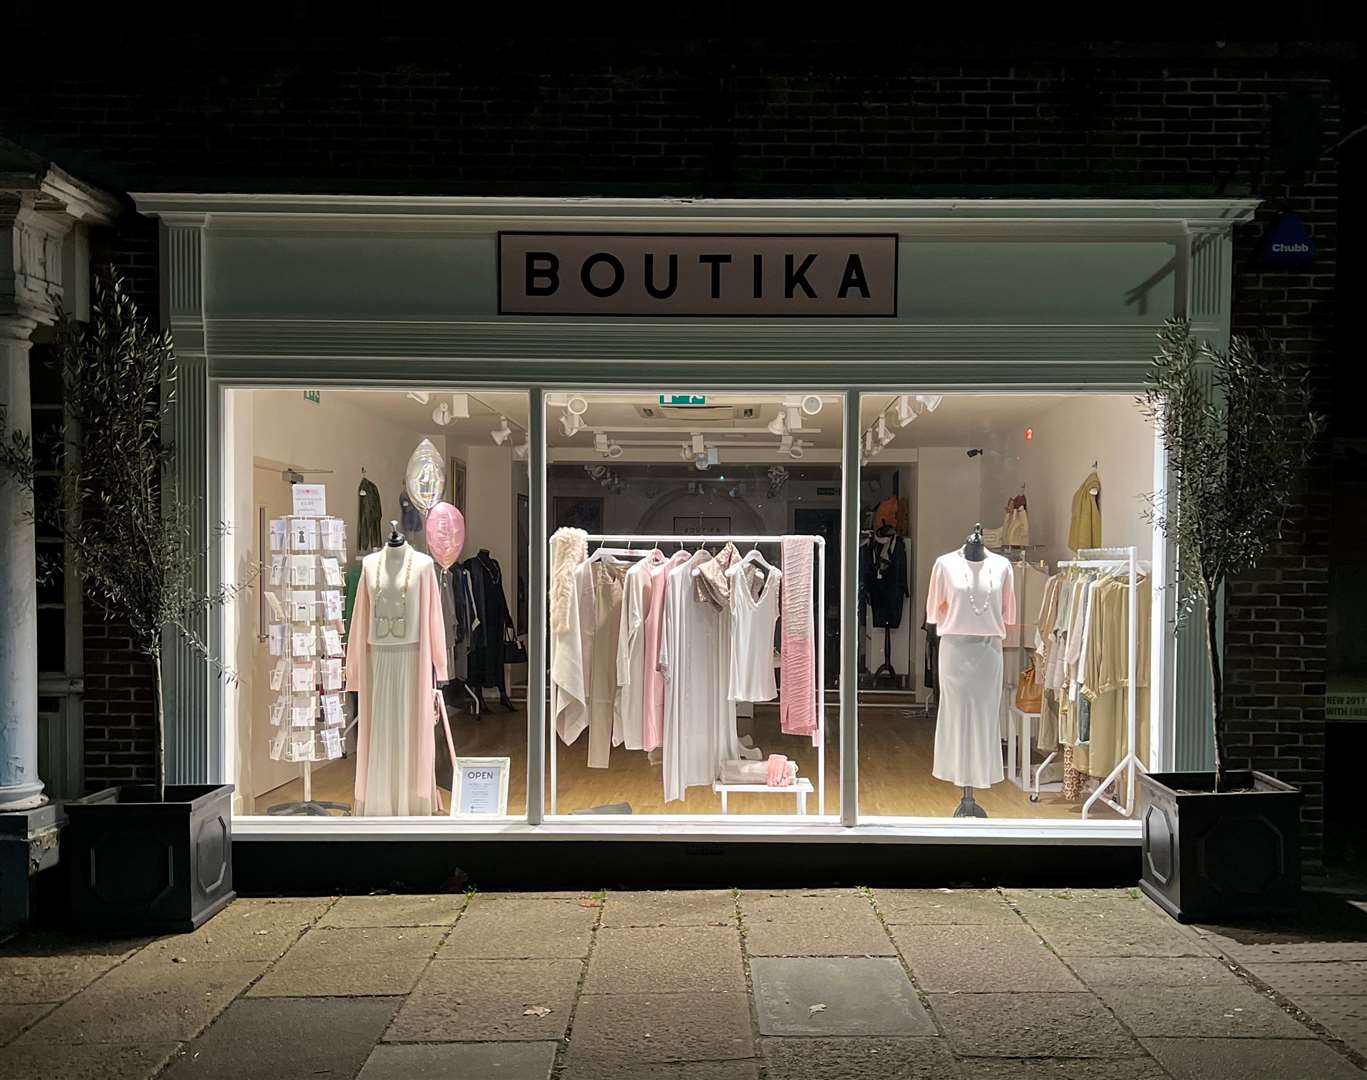 Boutika is located next to Caffè Nero in Tenterden high street